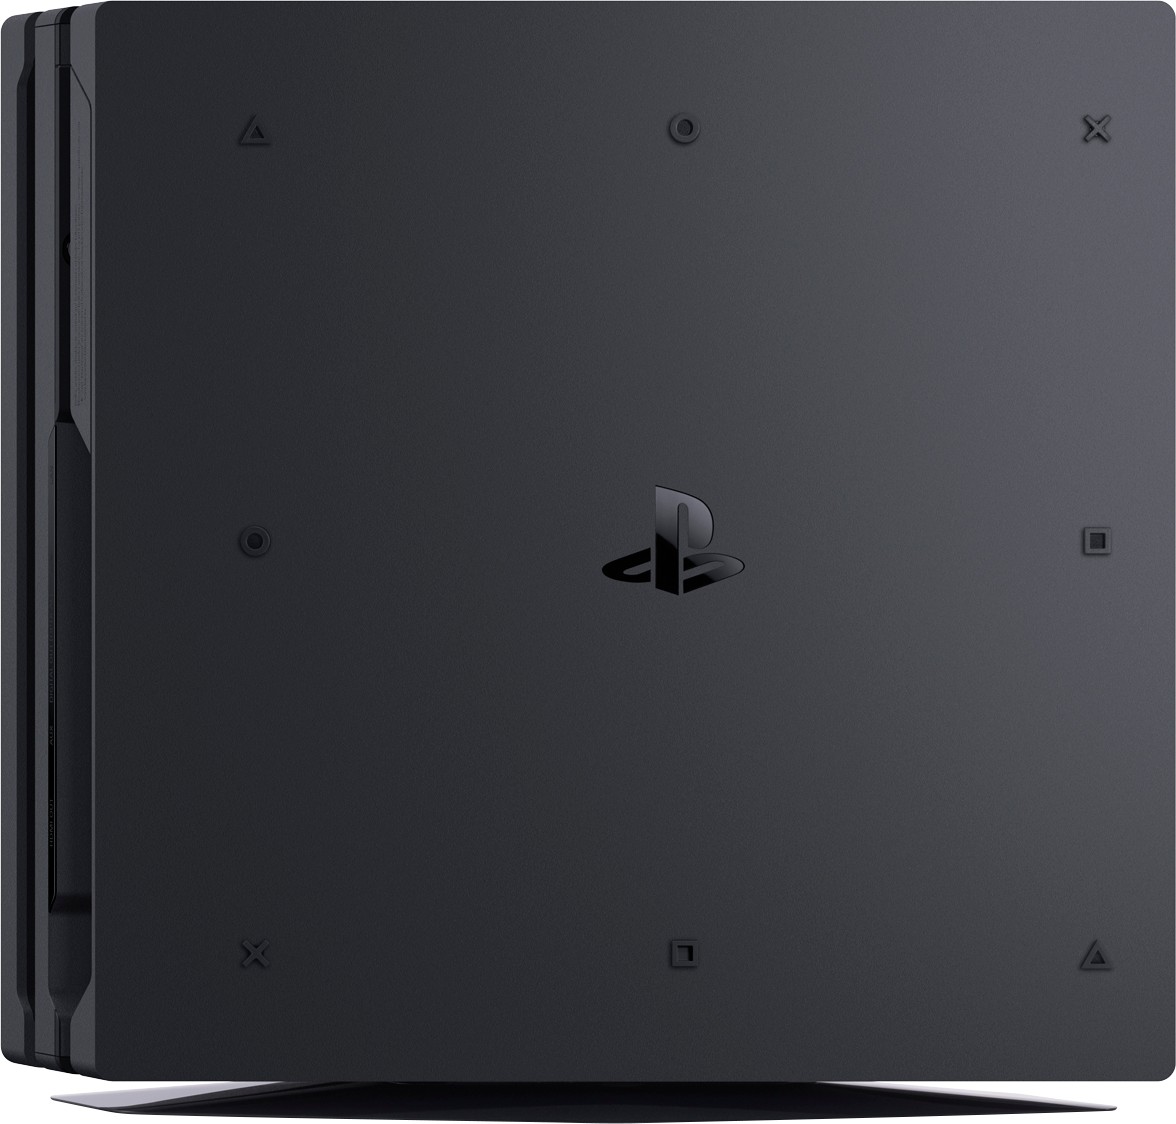 PlayStation 4 Pro (1TB, Jet Black) + 2 Controller